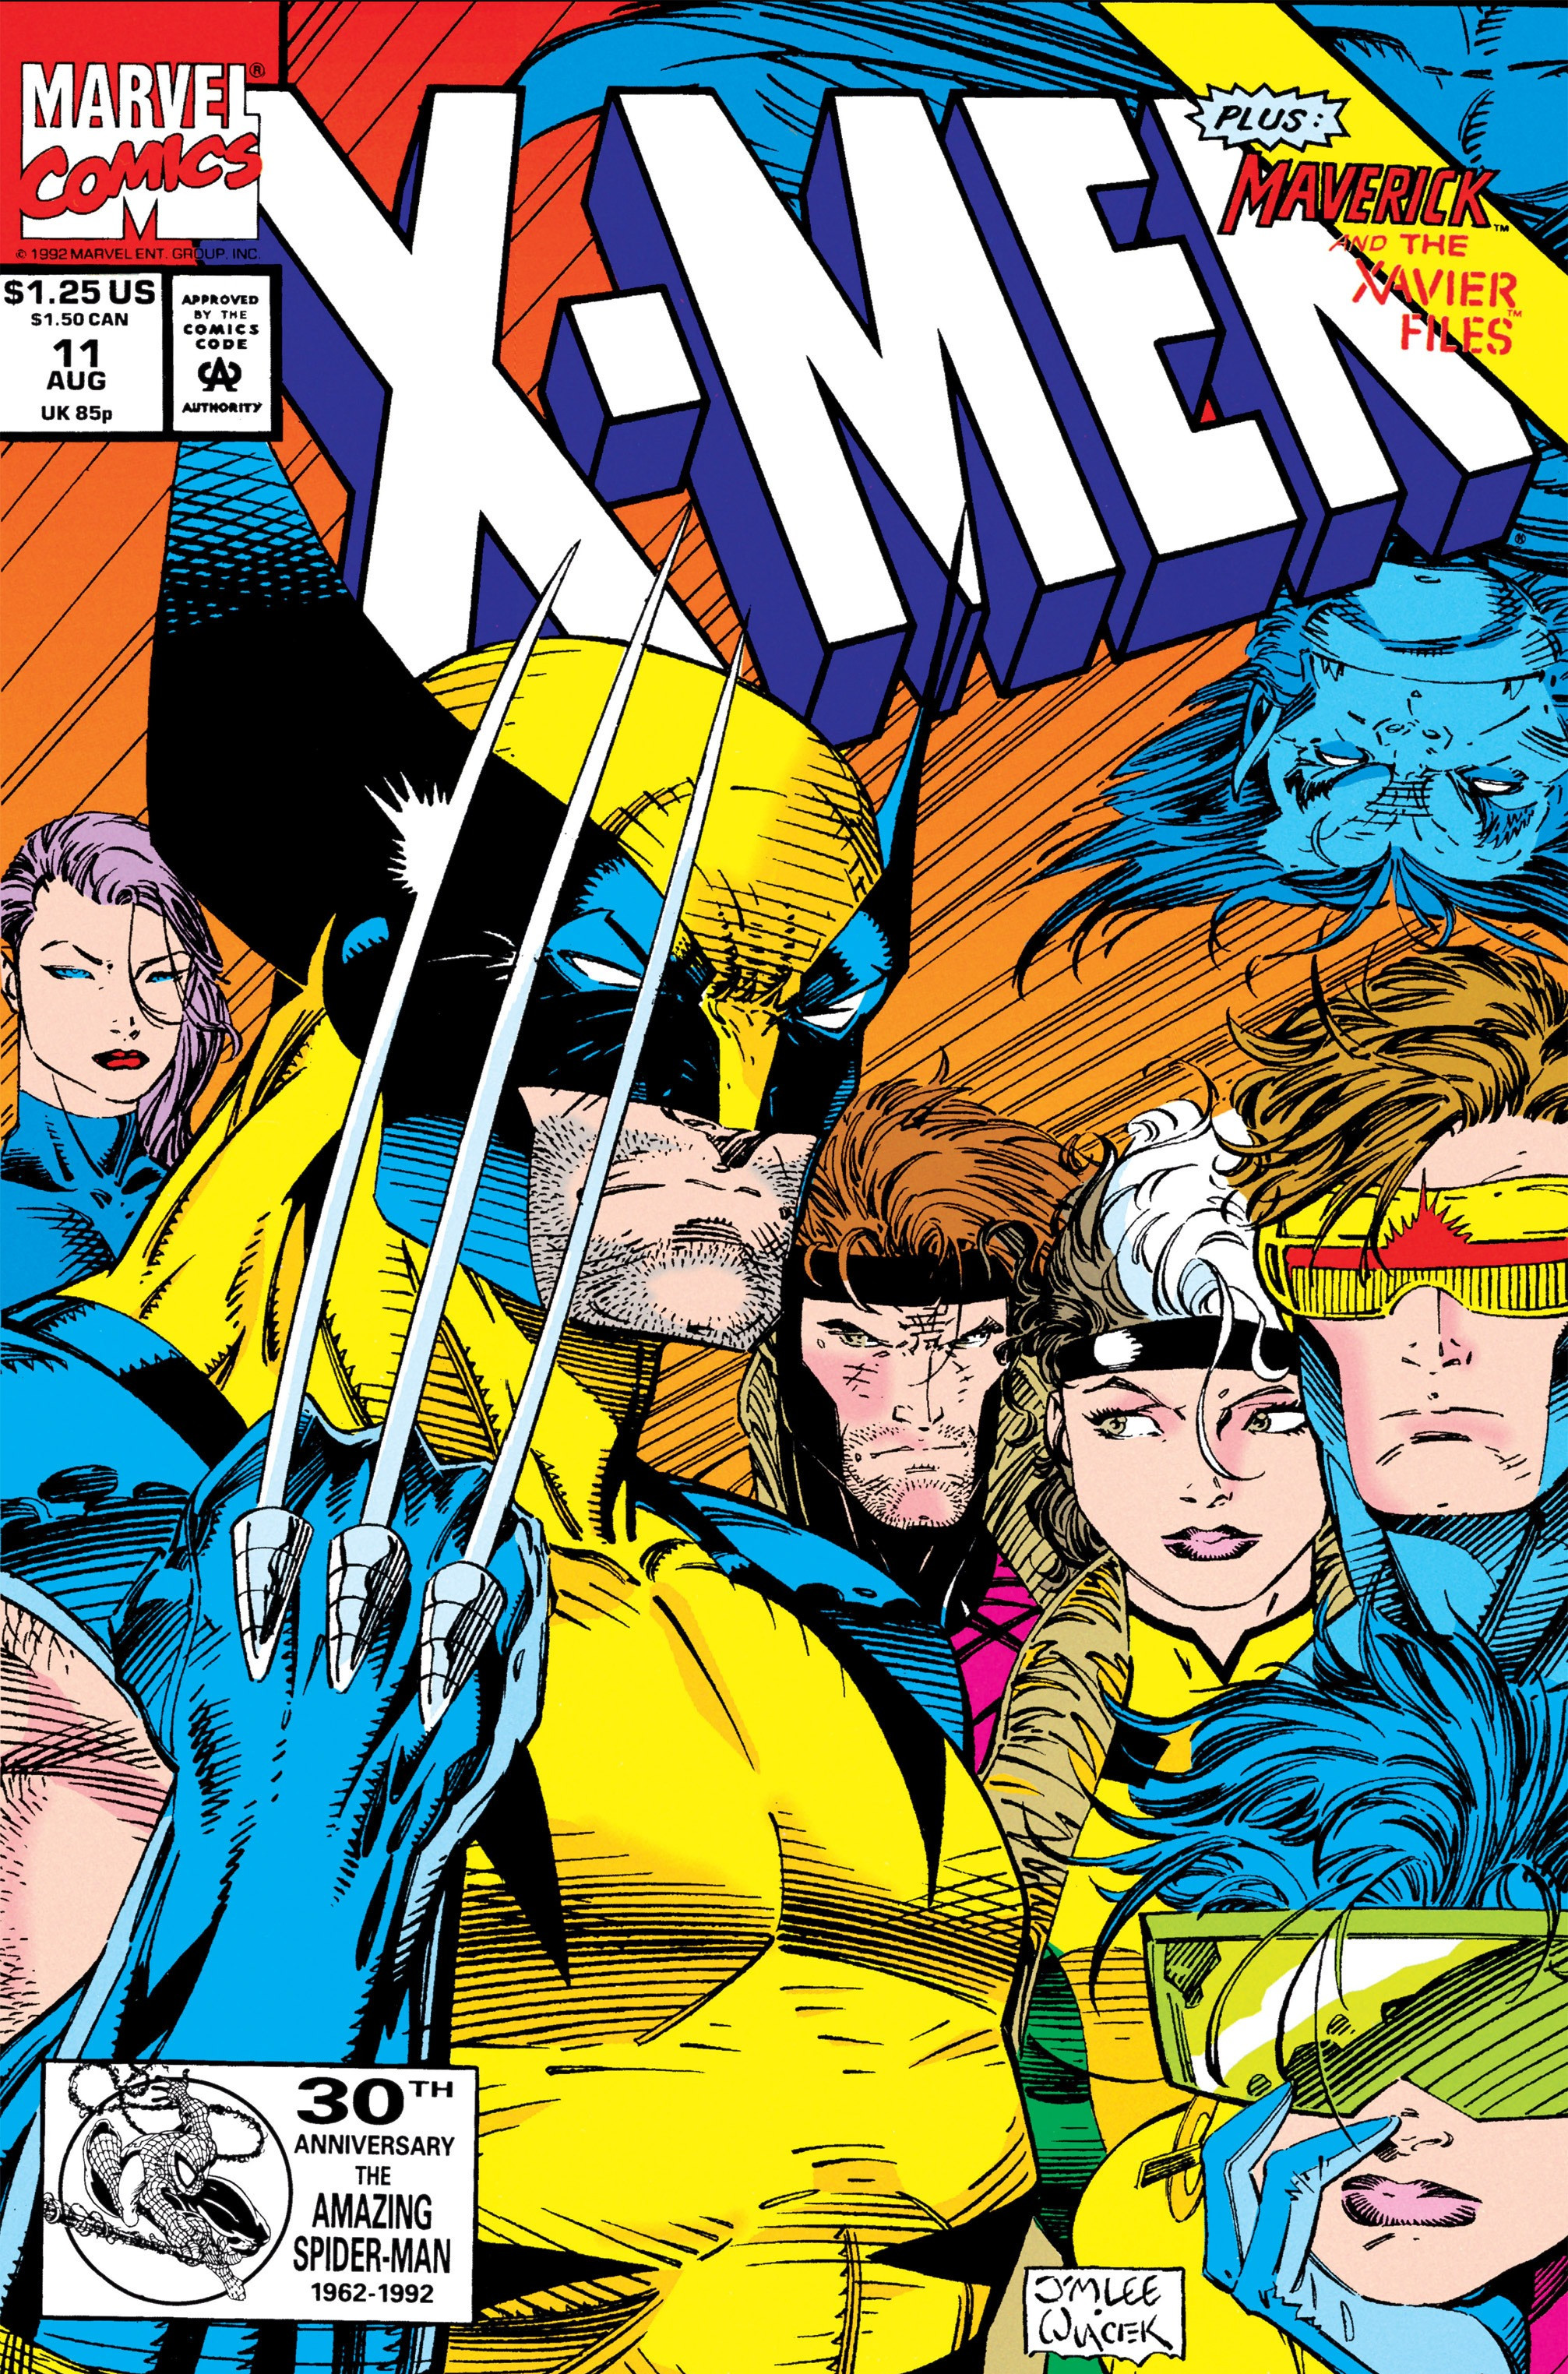 Watch Movie X-Men: Days of Future Past HD